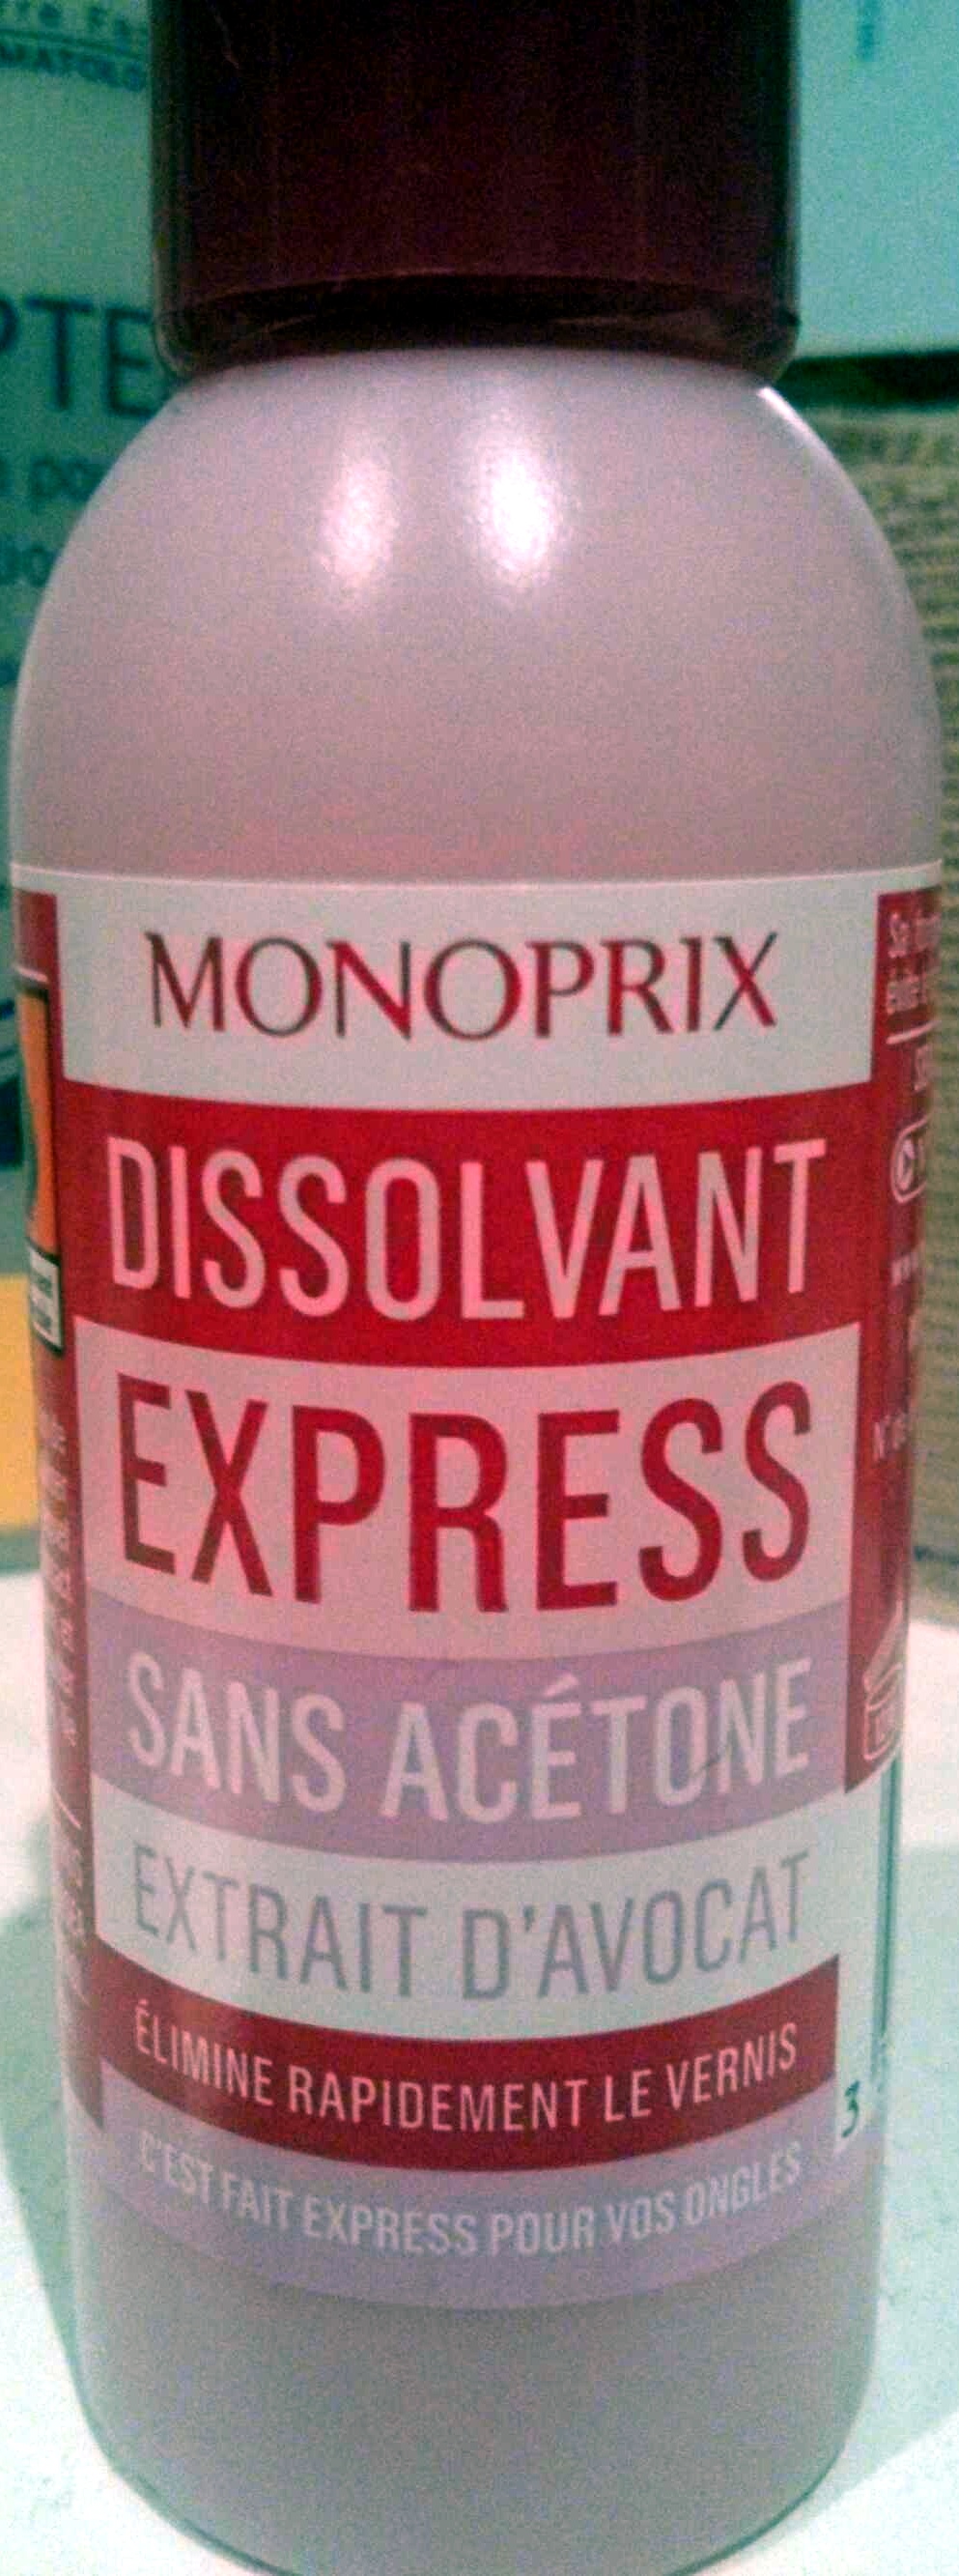 Dissolvant express sans acétone extrait d'avocat - Produkt - fr